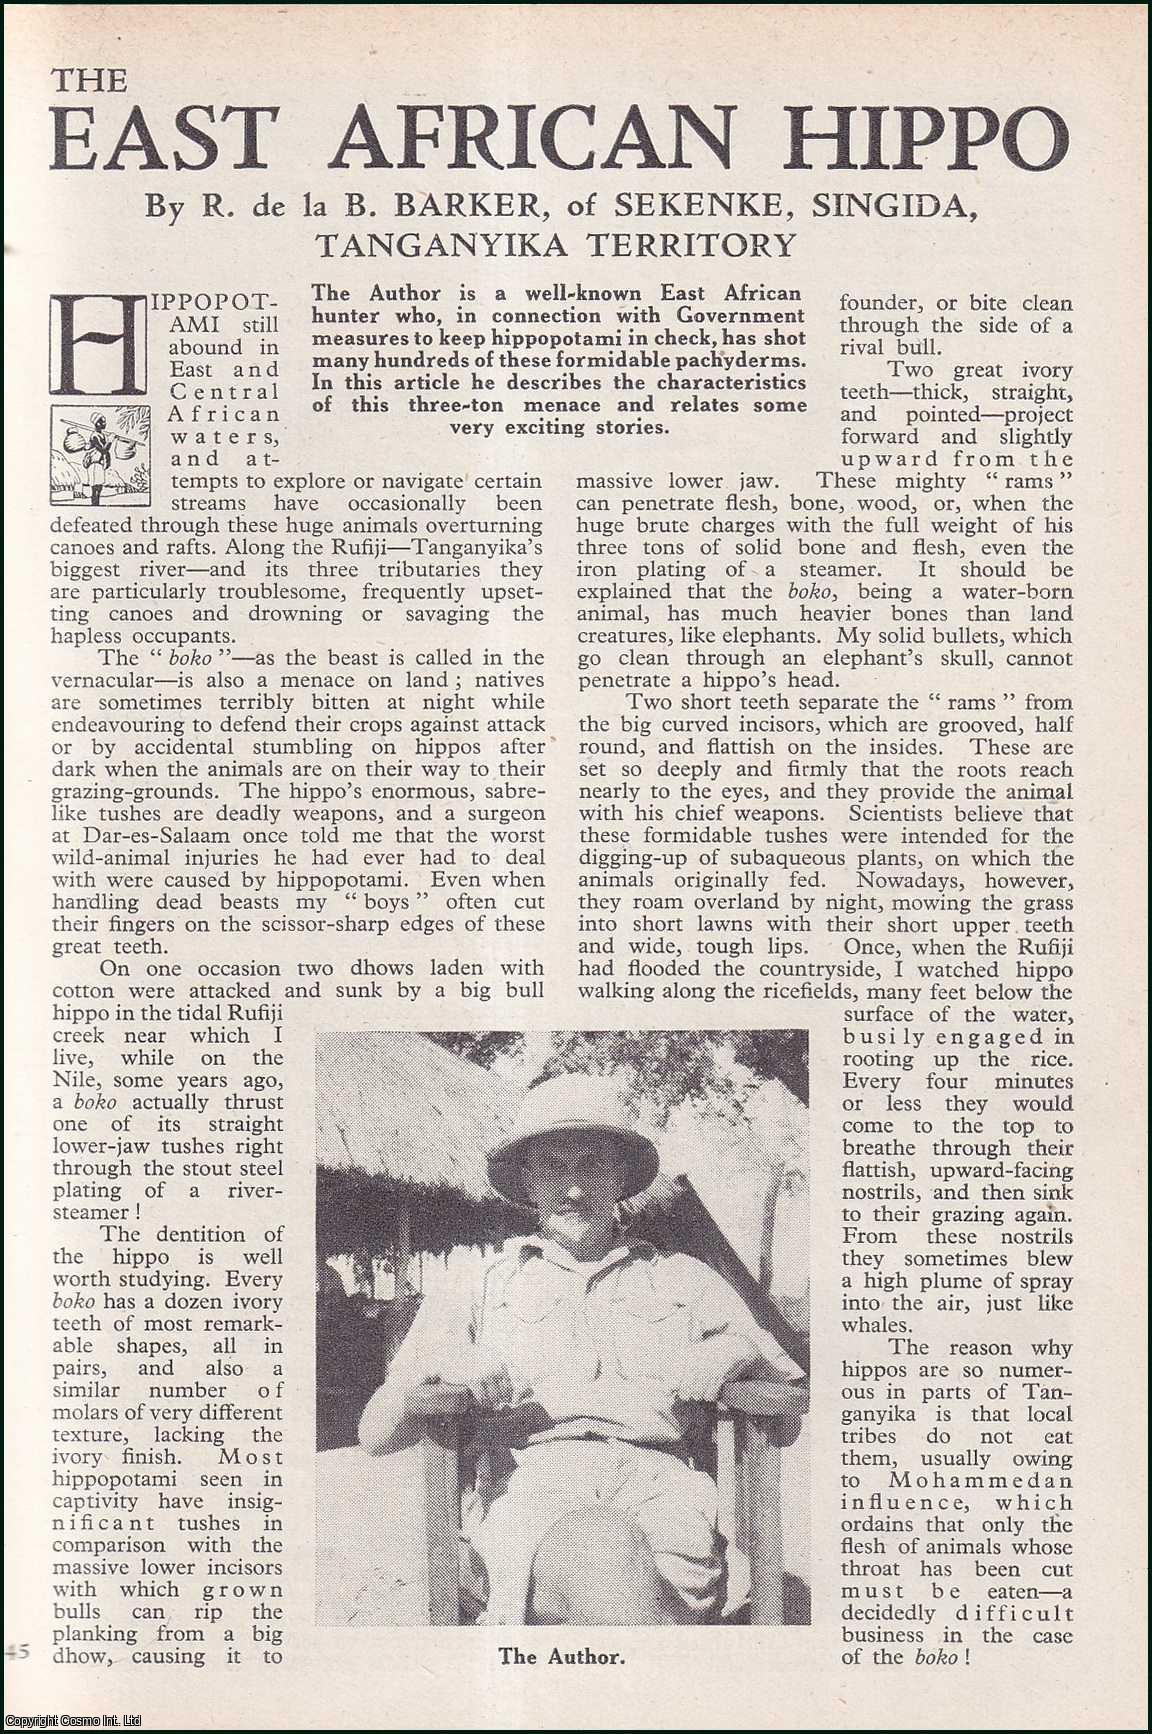 R. de la B. Barker, of Sekenke, Singida, Tanganyika Territory. - The East African Hippo. An uncommon original article from the Wide World Magazine, 1947.